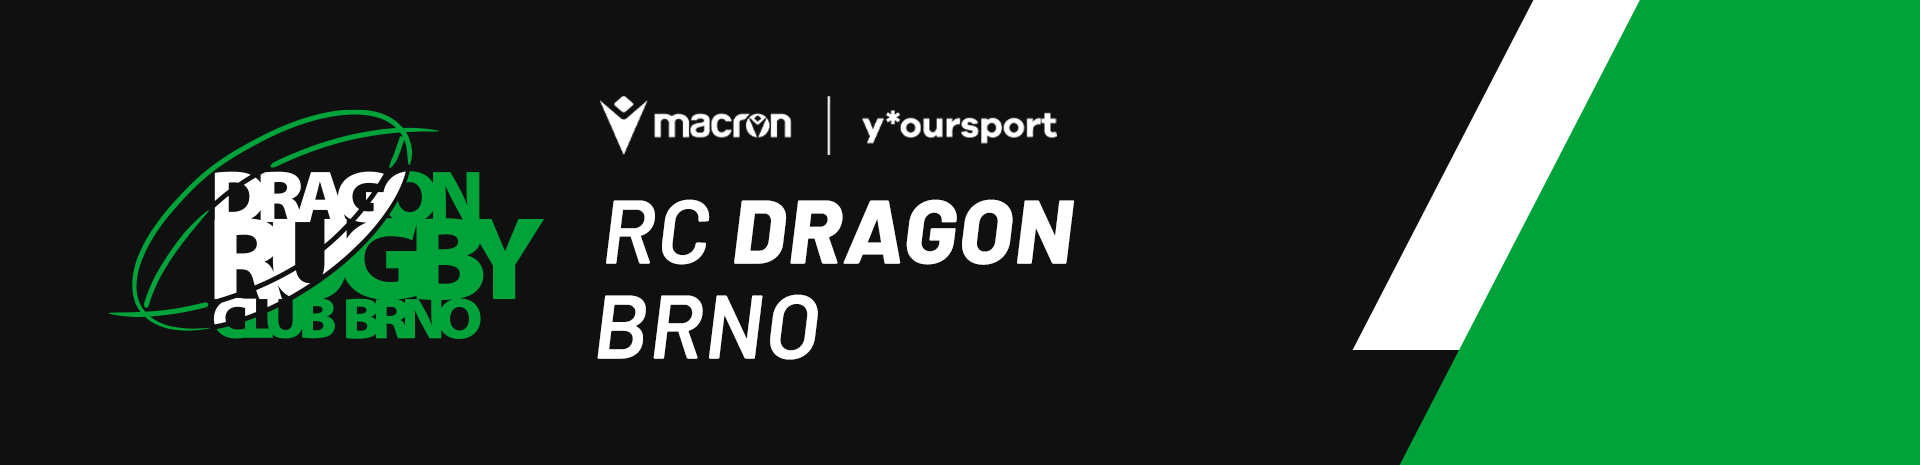 RC Dragon Brno desktop